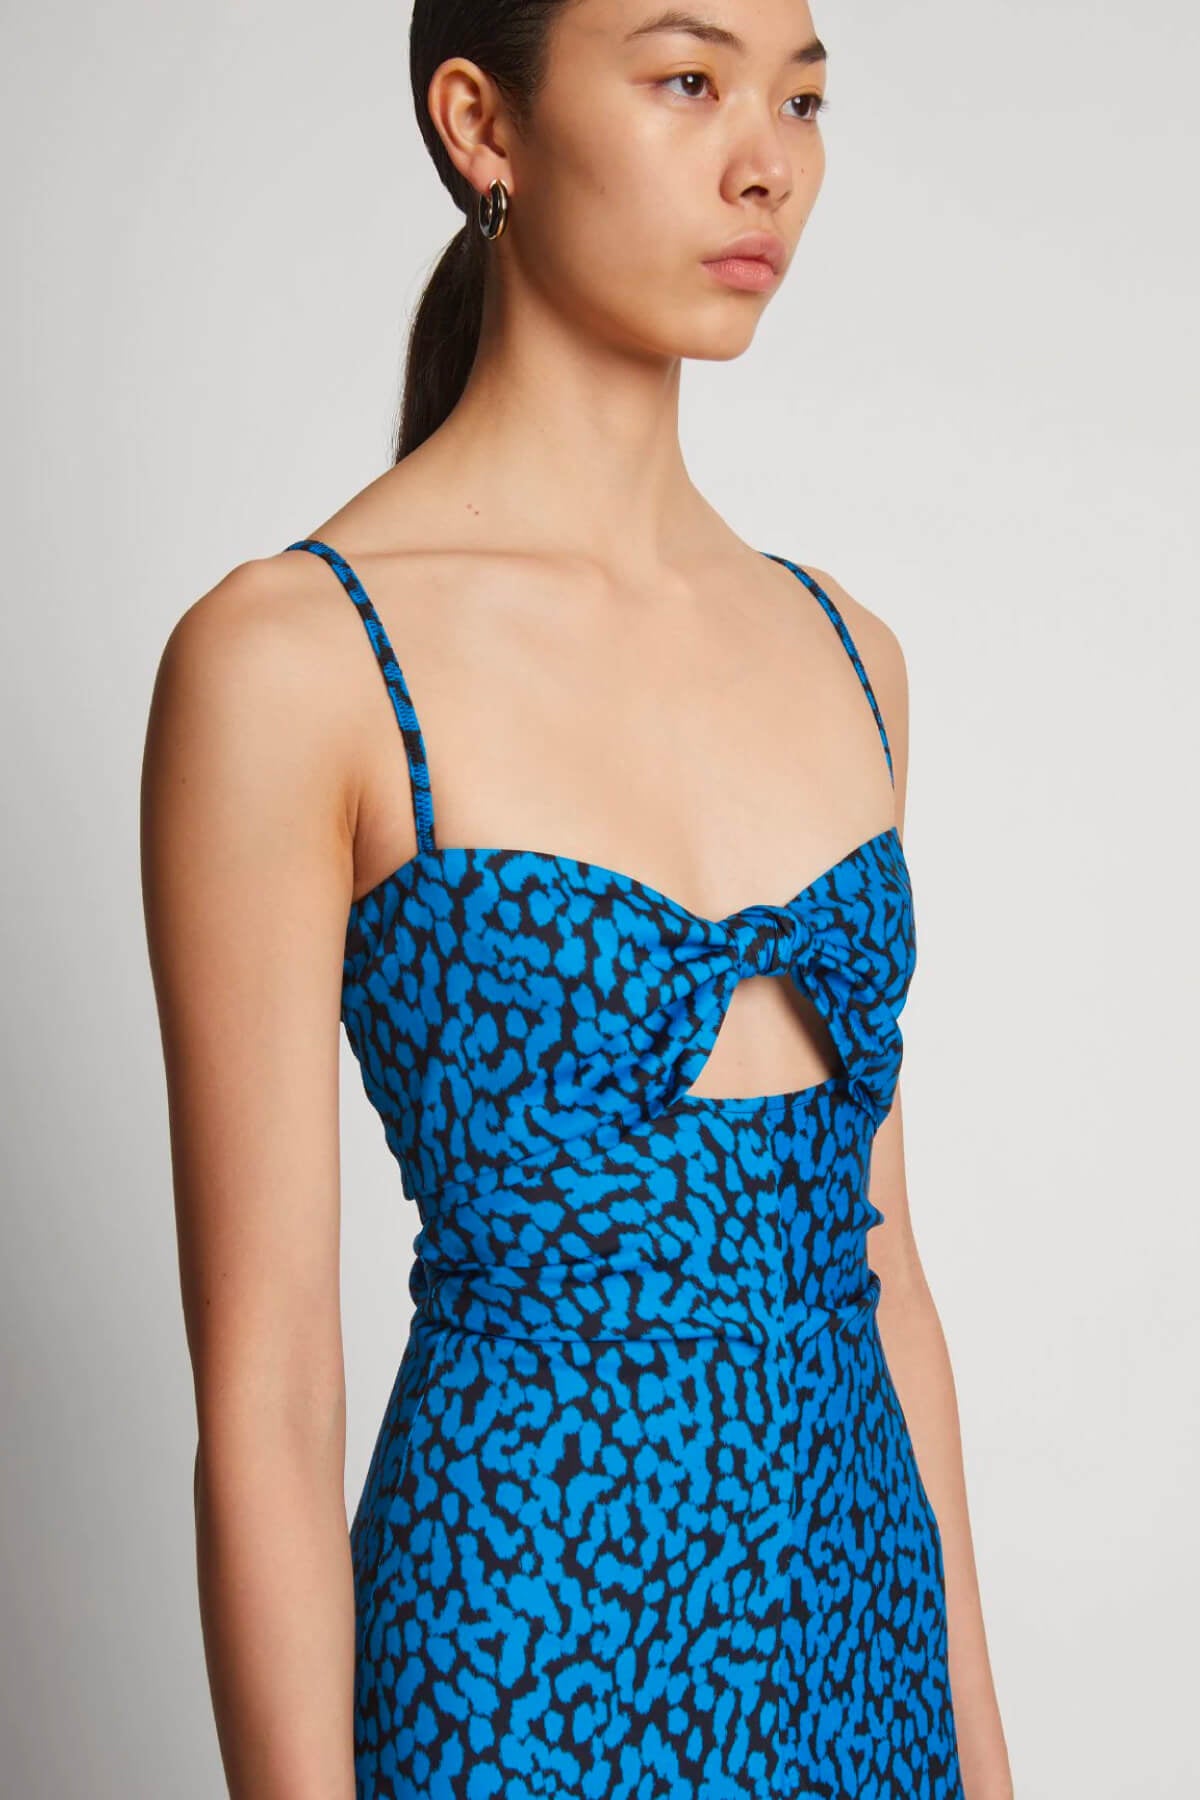 Proenza Schouler Printed Leopard Tank Dress - Turquoise Multi